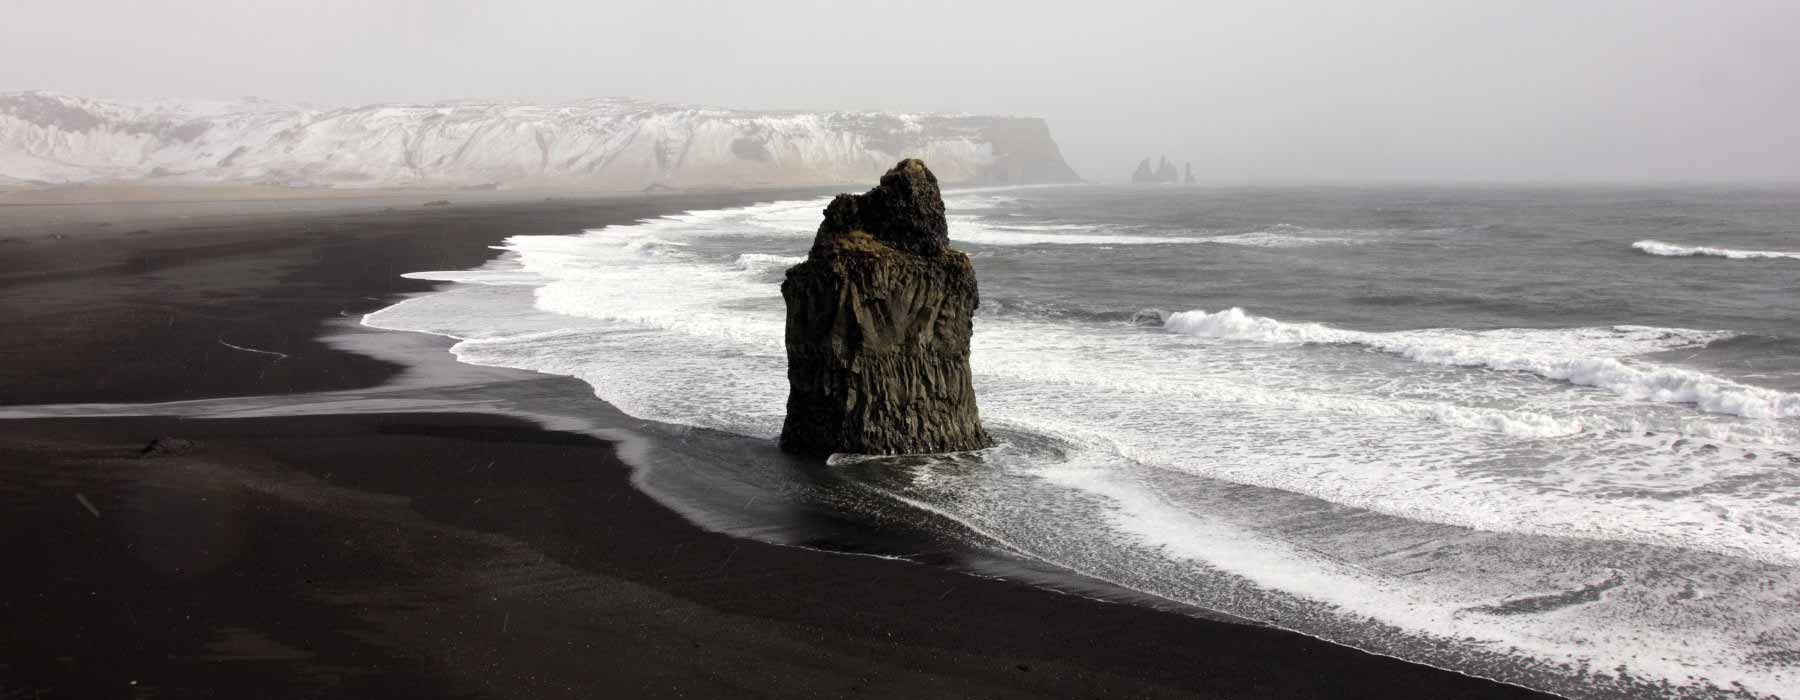 All our Iceland<br class="hidden-md hidden-lg" /> Road Trips